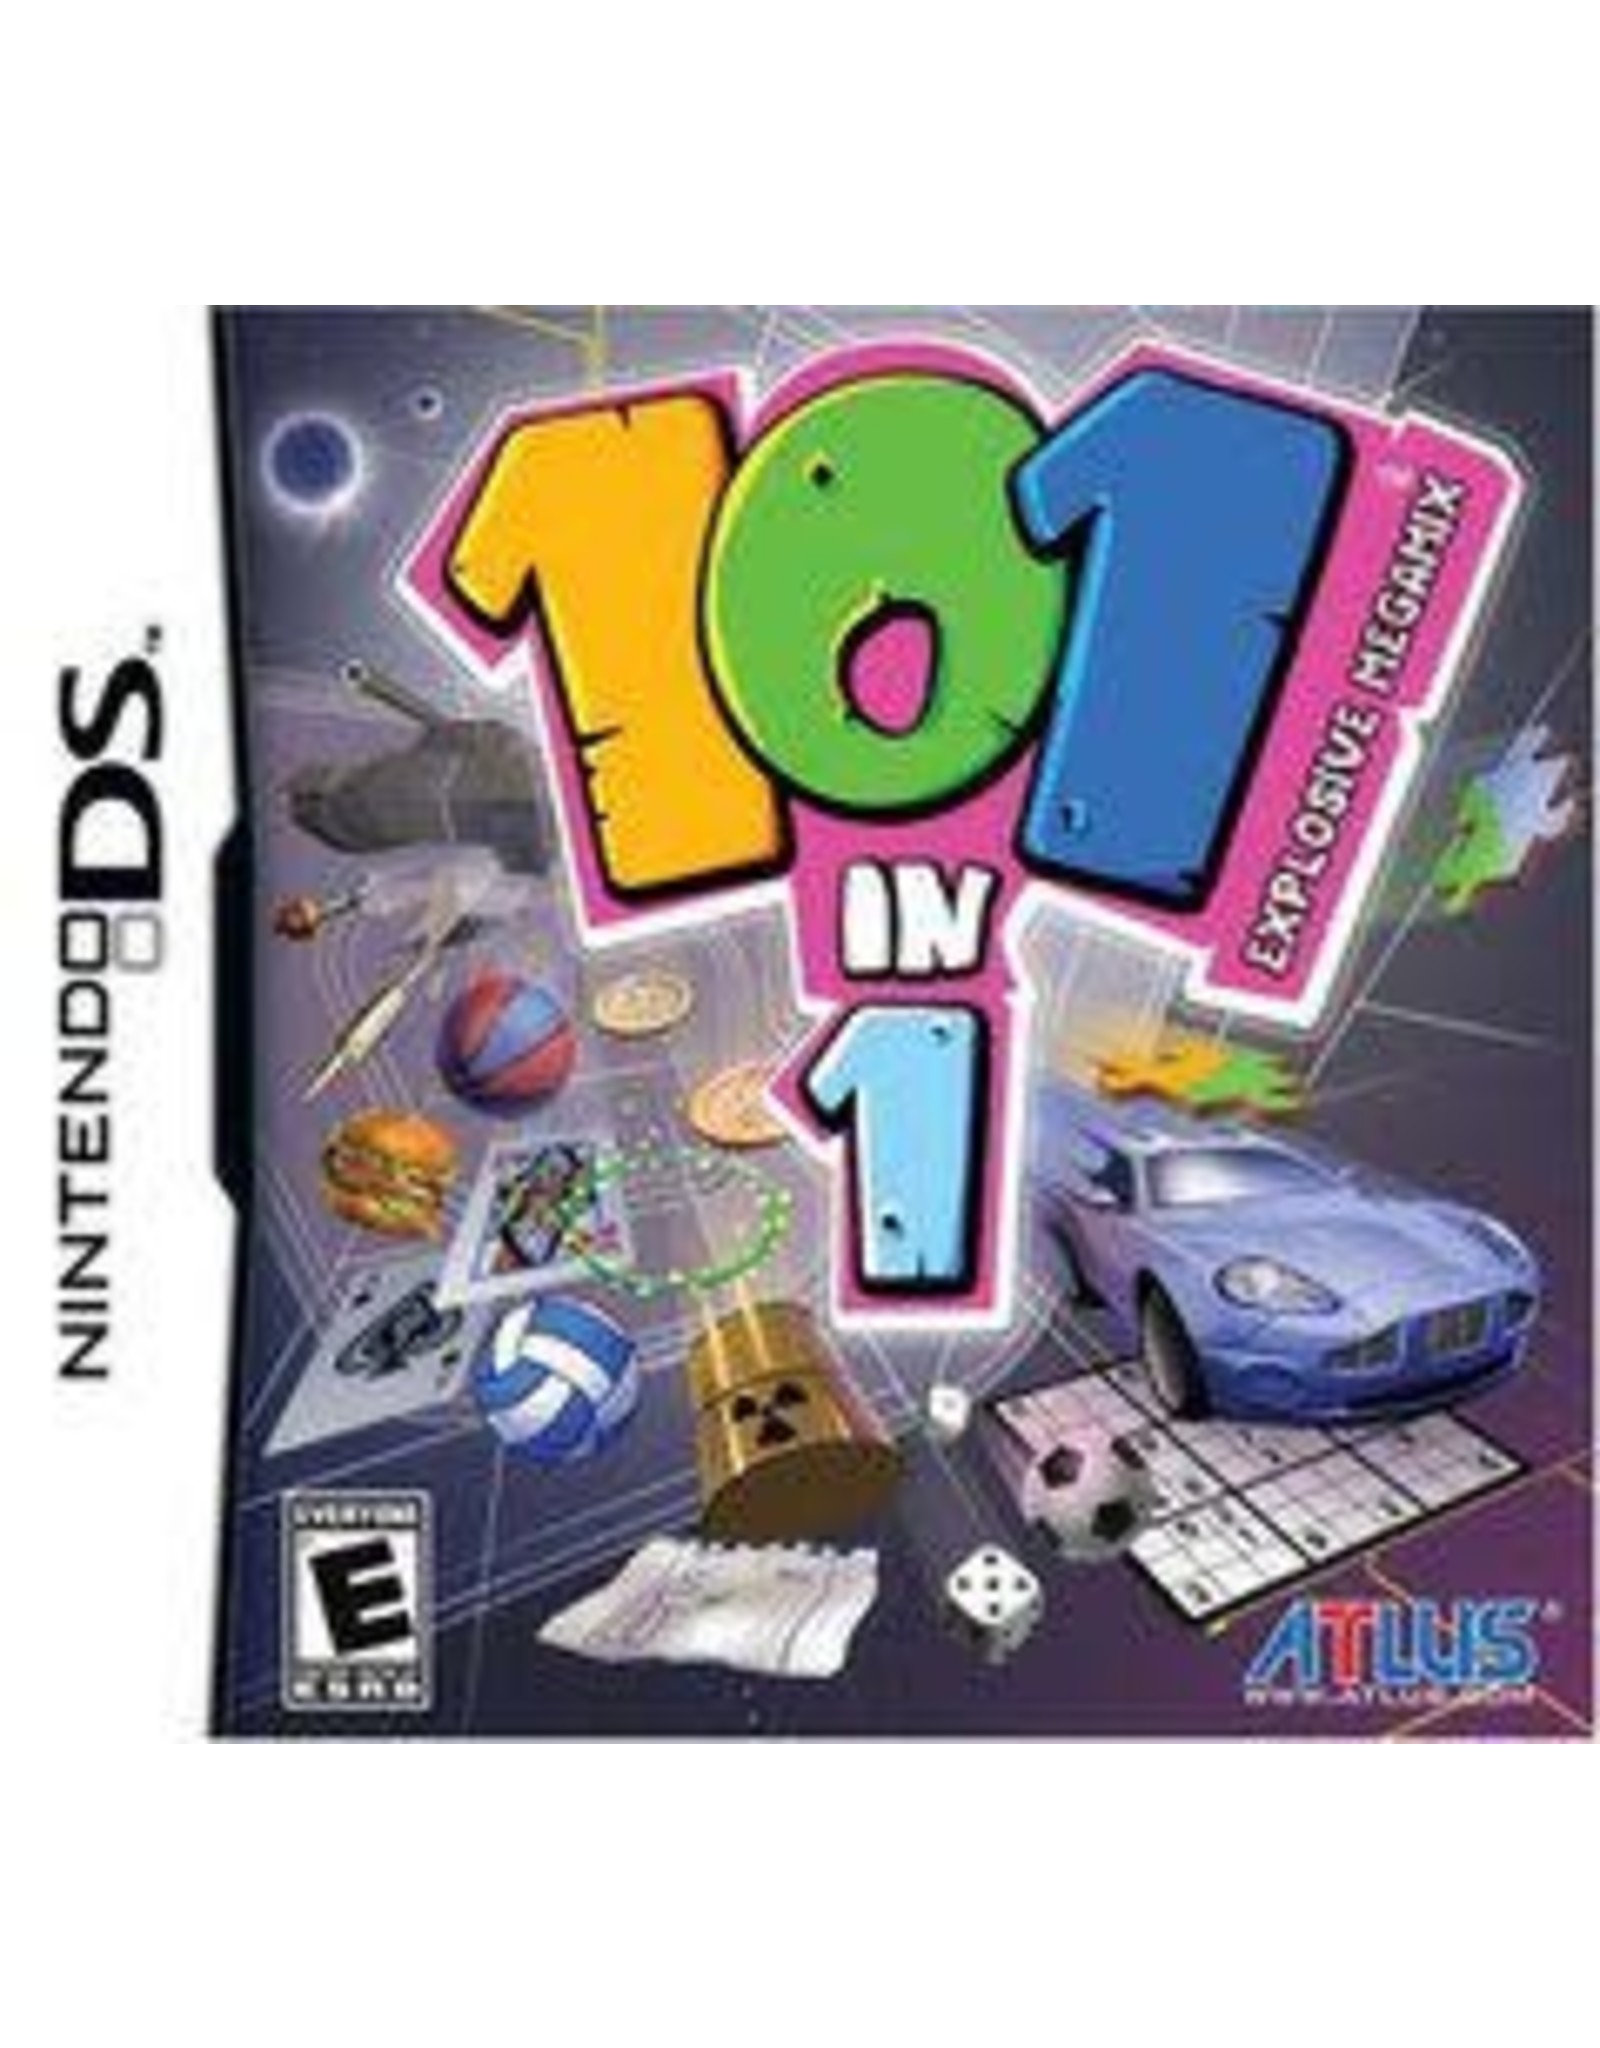 Nintendo DS 101-in-1 Explosive Megamix (CiB)